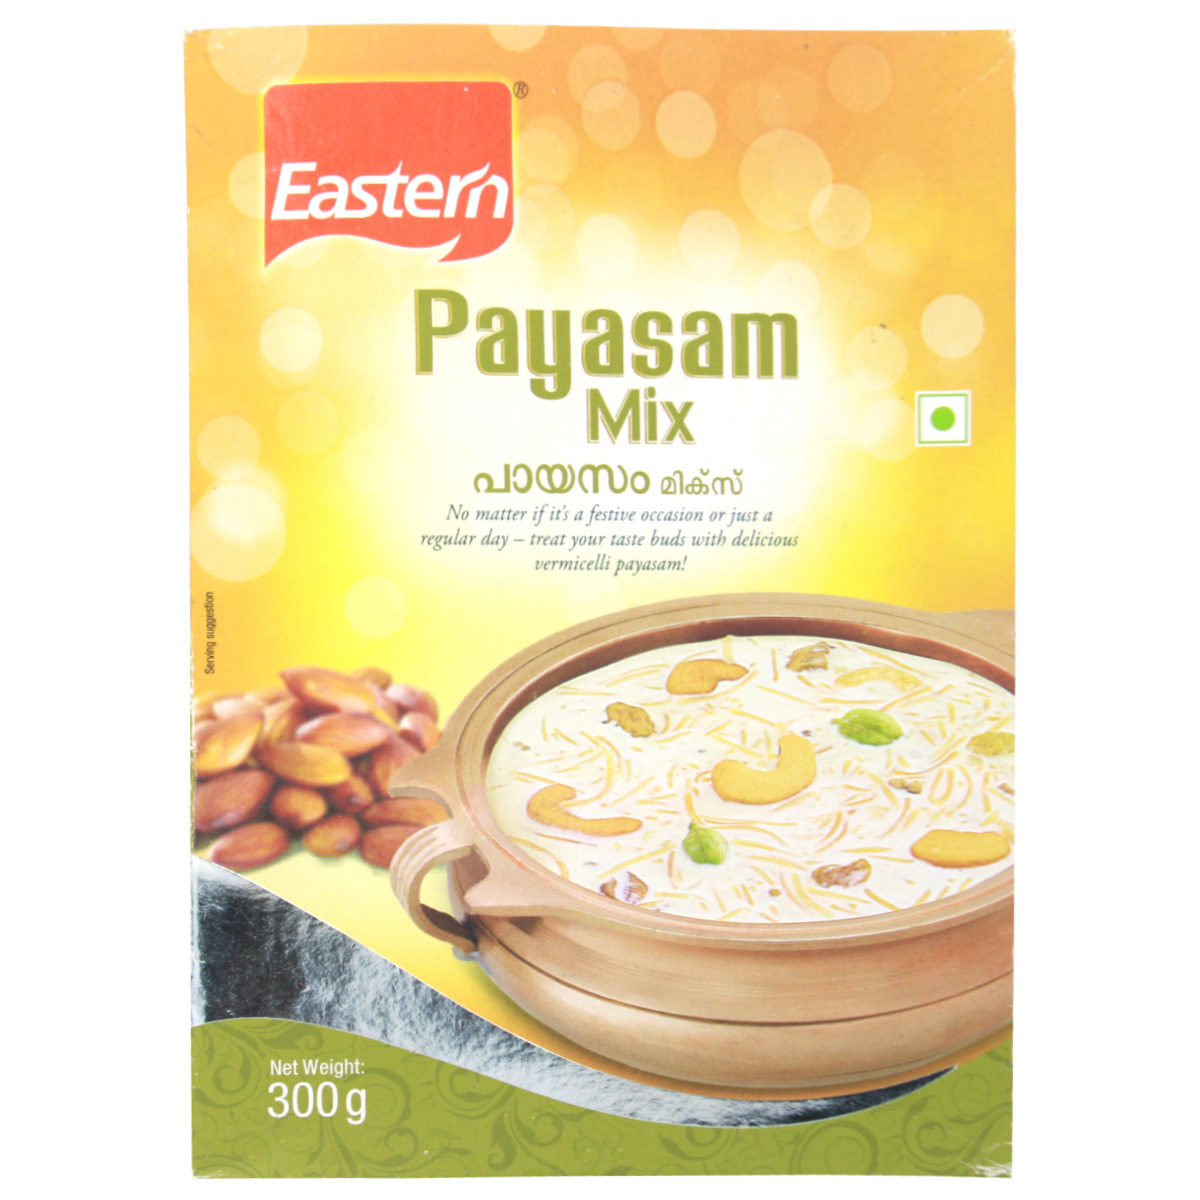 Eastern Payasam Mix Duplex 200g